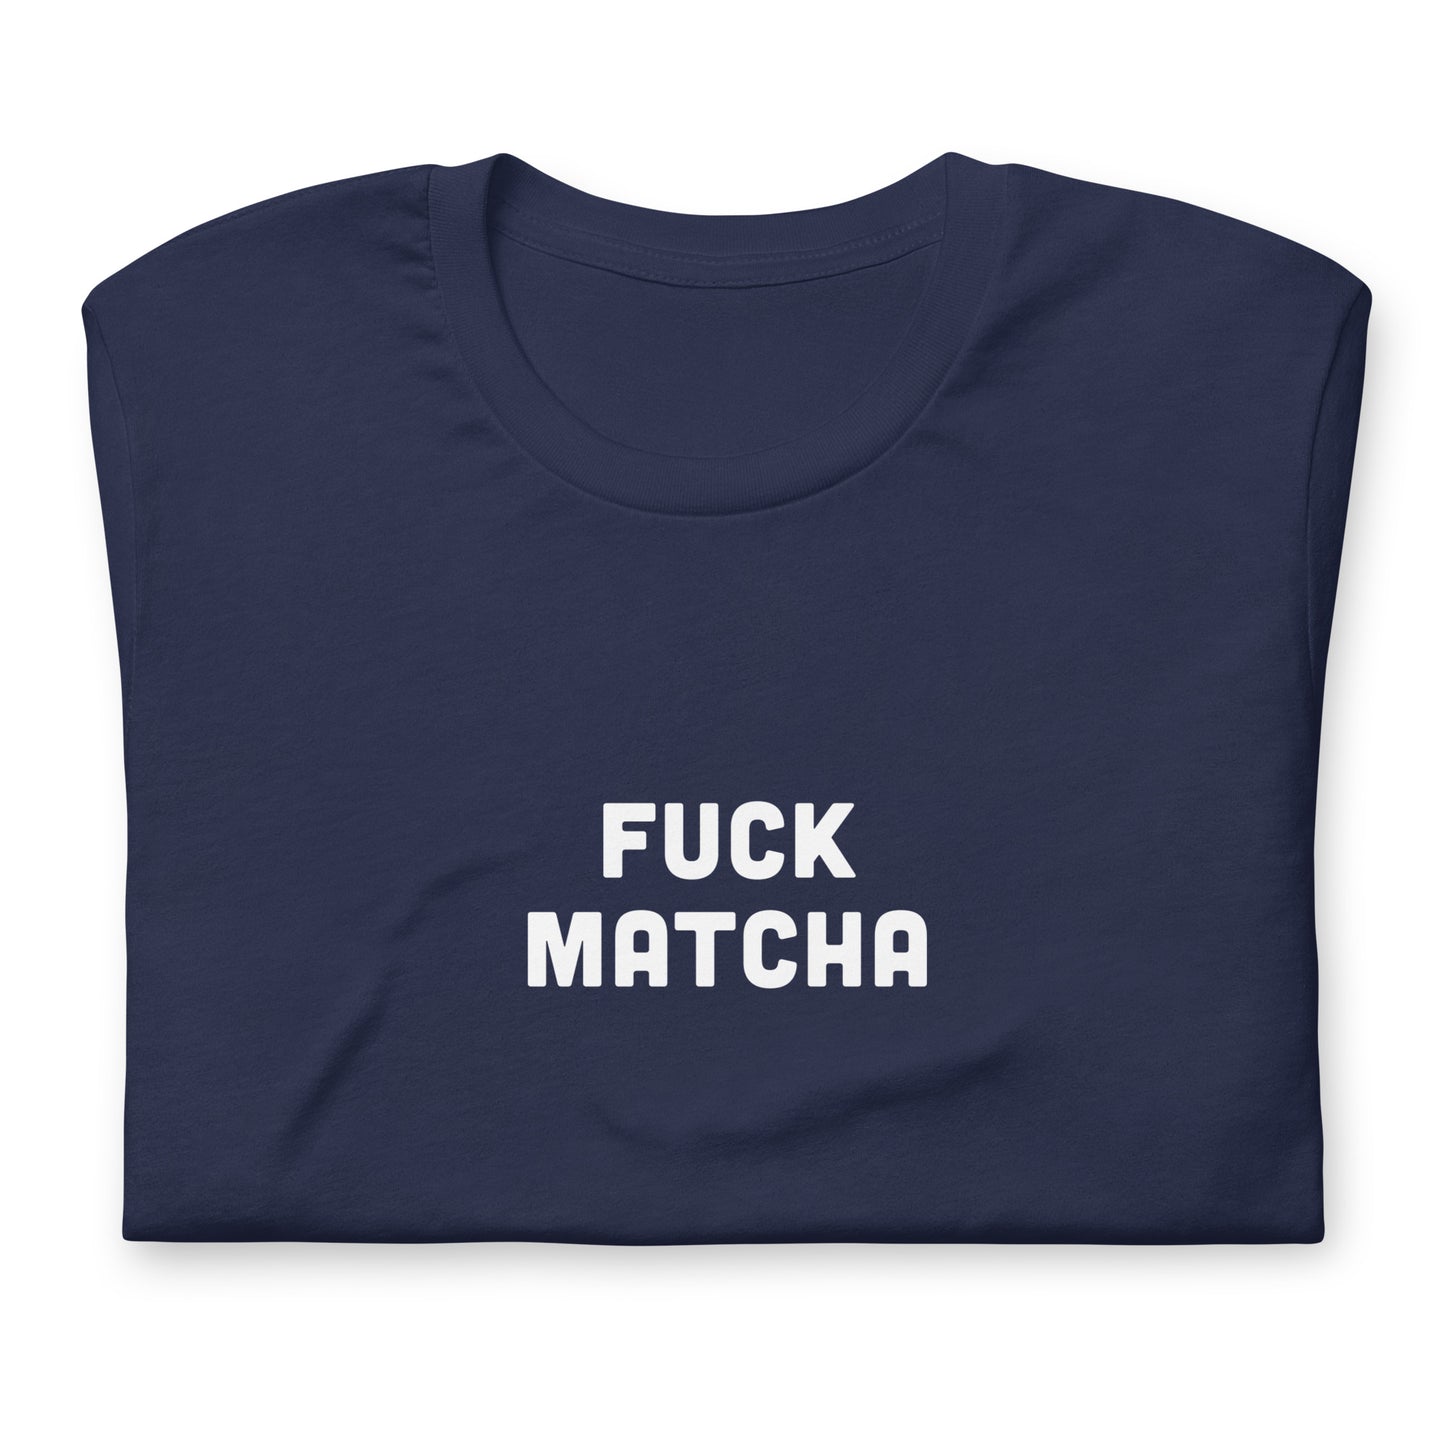 Fuck Matcha T-Shirt Size L Color Black